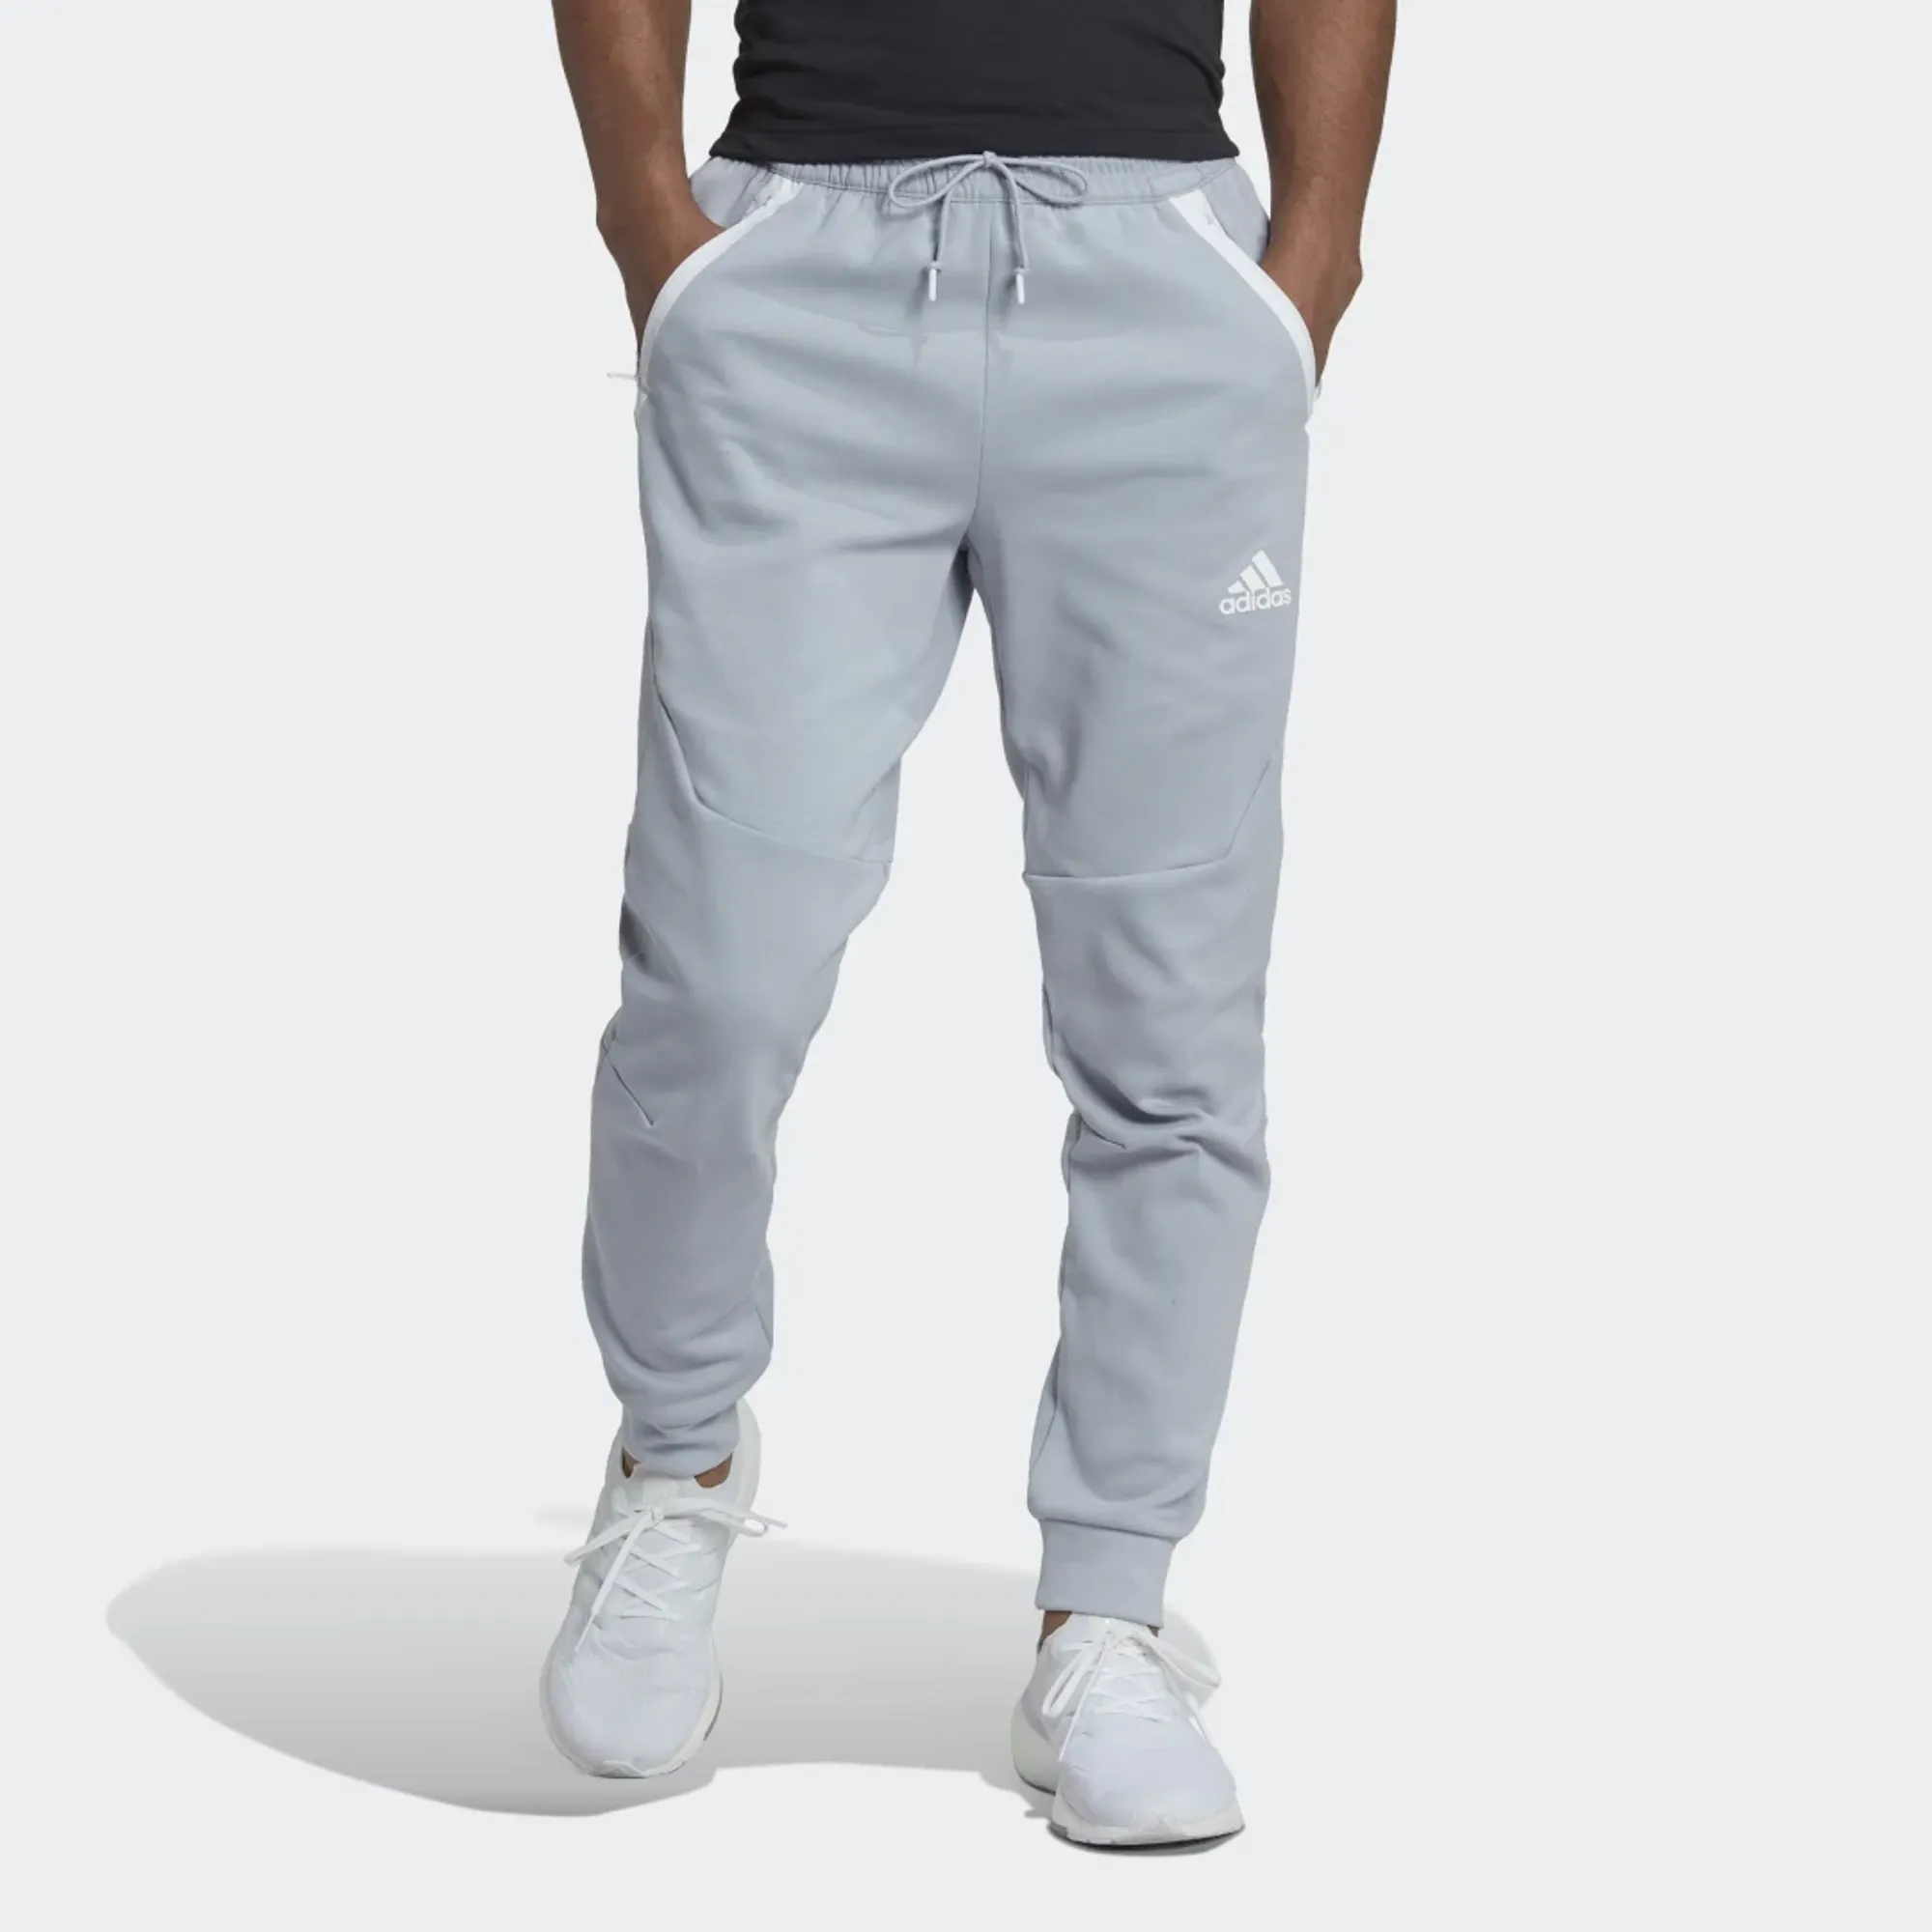 adidas Originals trousers men's gray color | buy on PRM